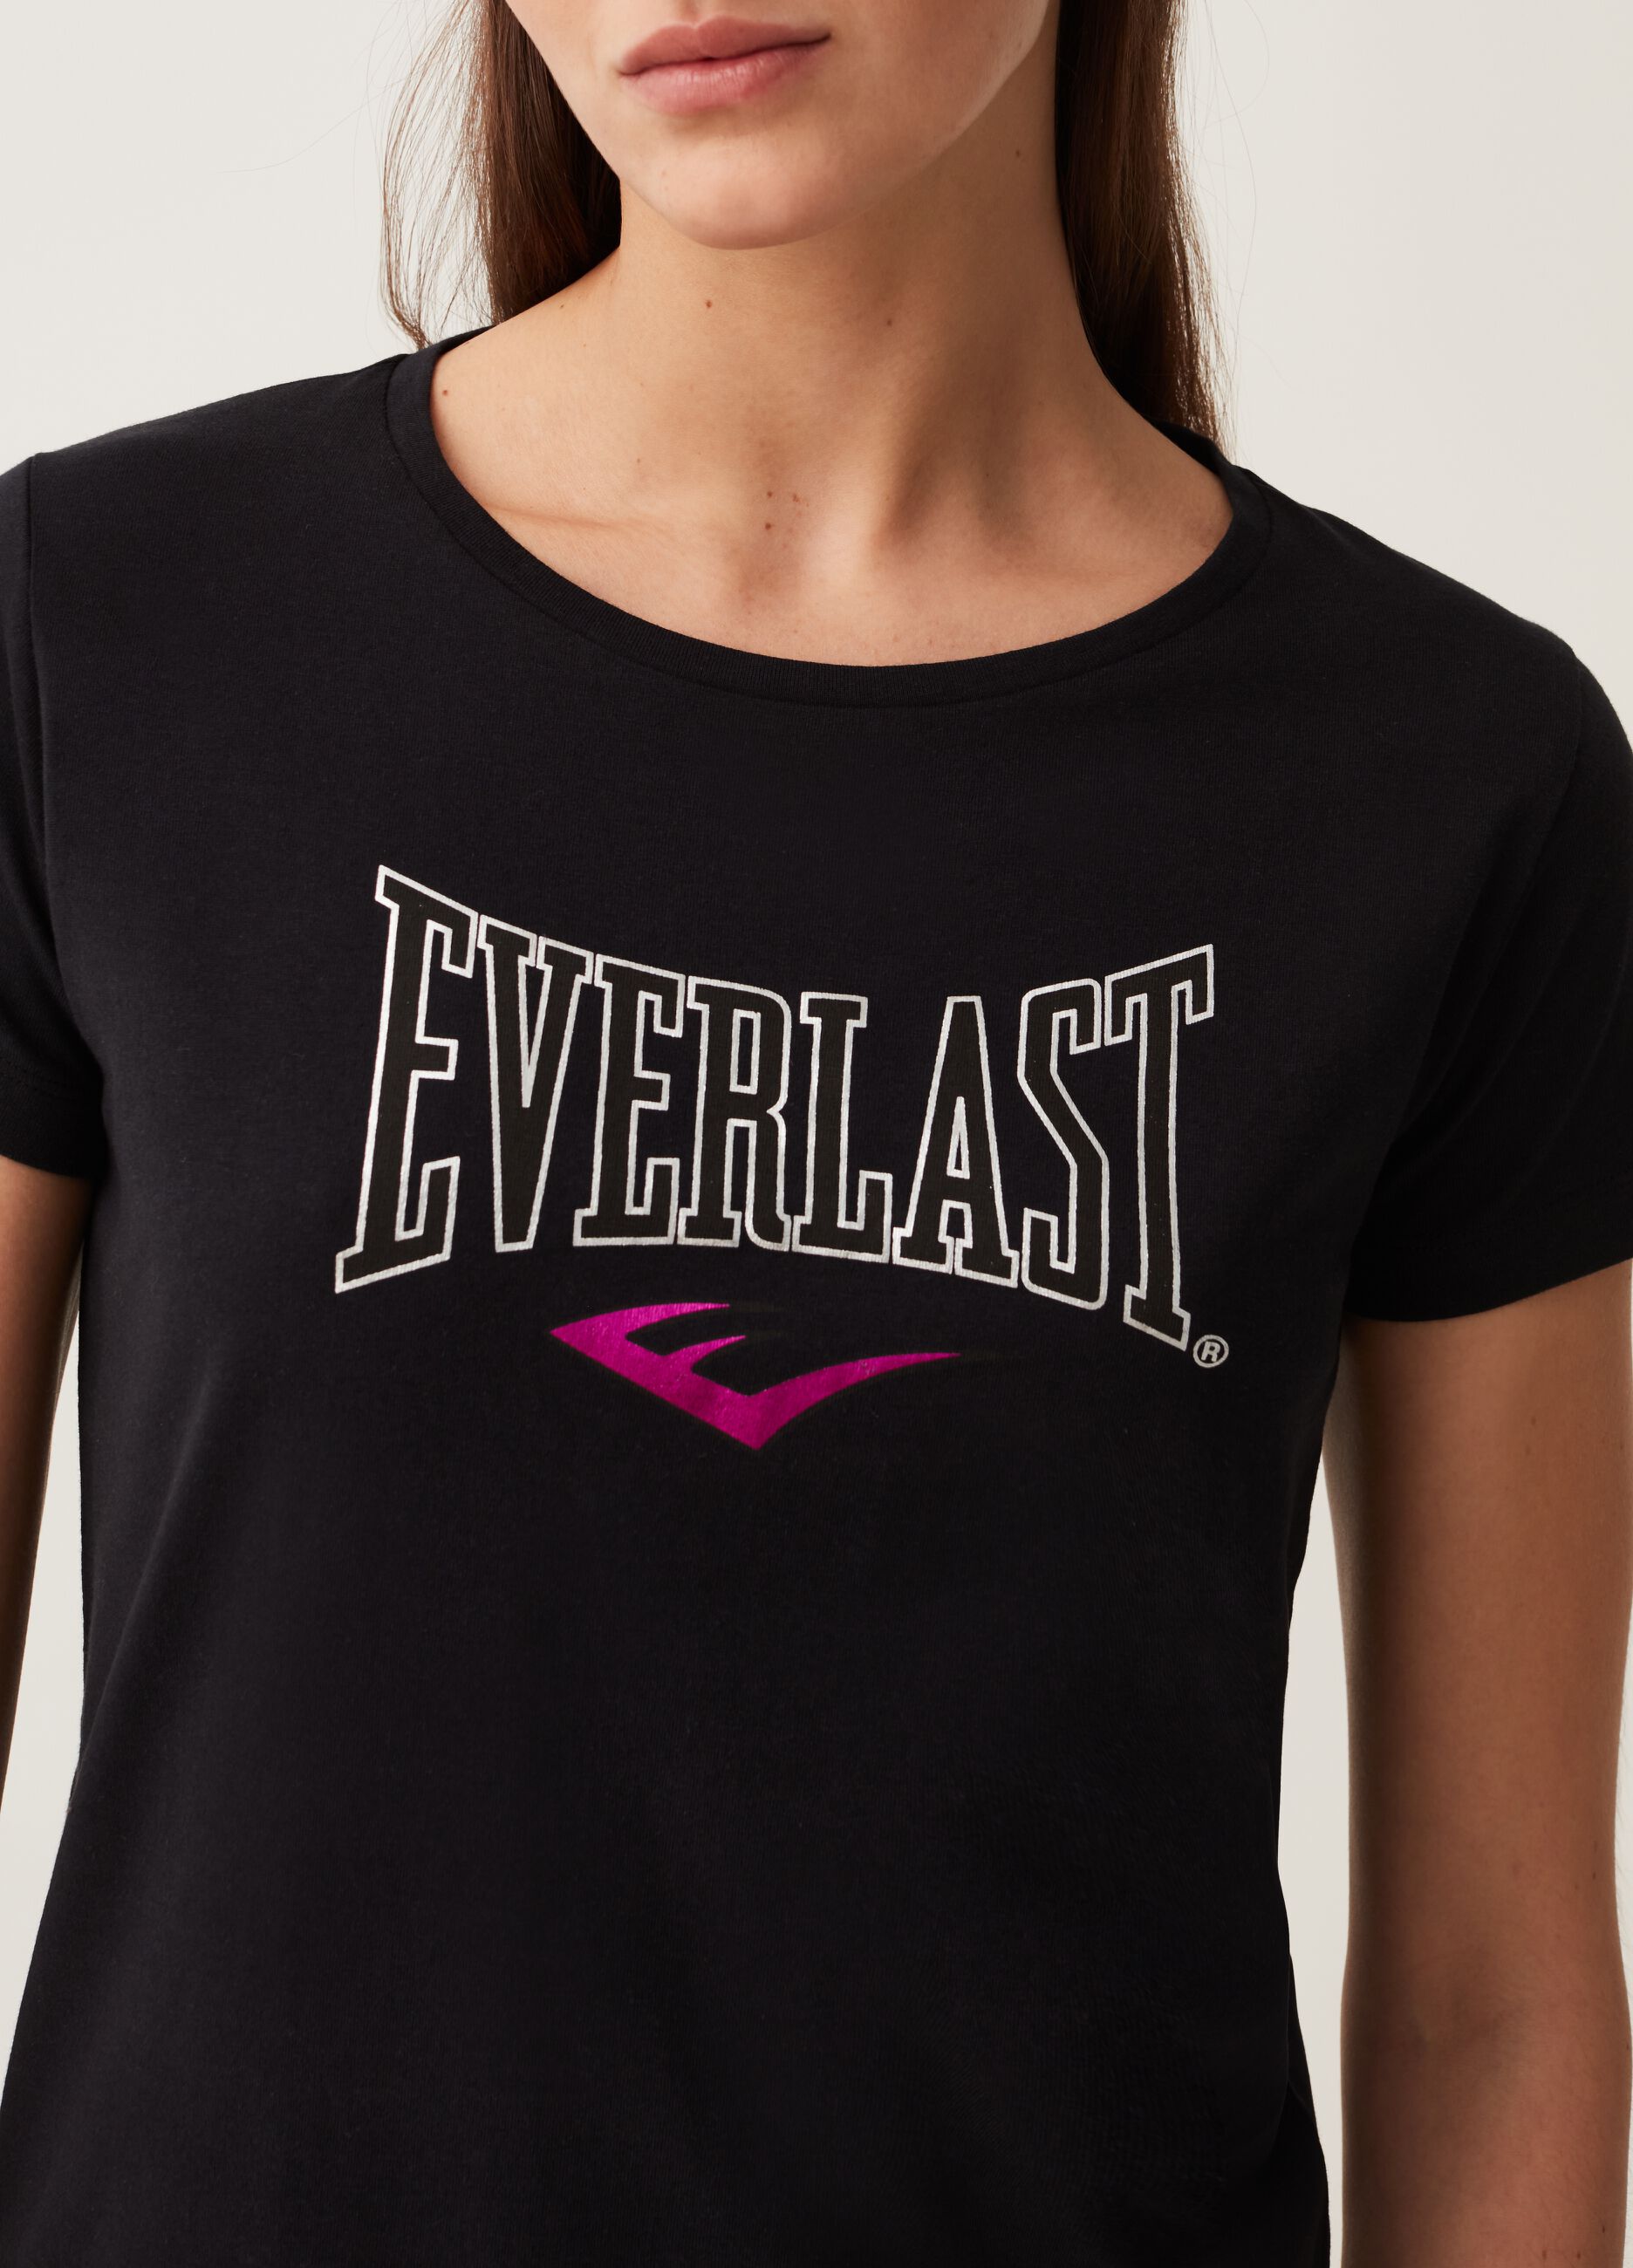 T-shirt in cotone con stampa Everlast in foil